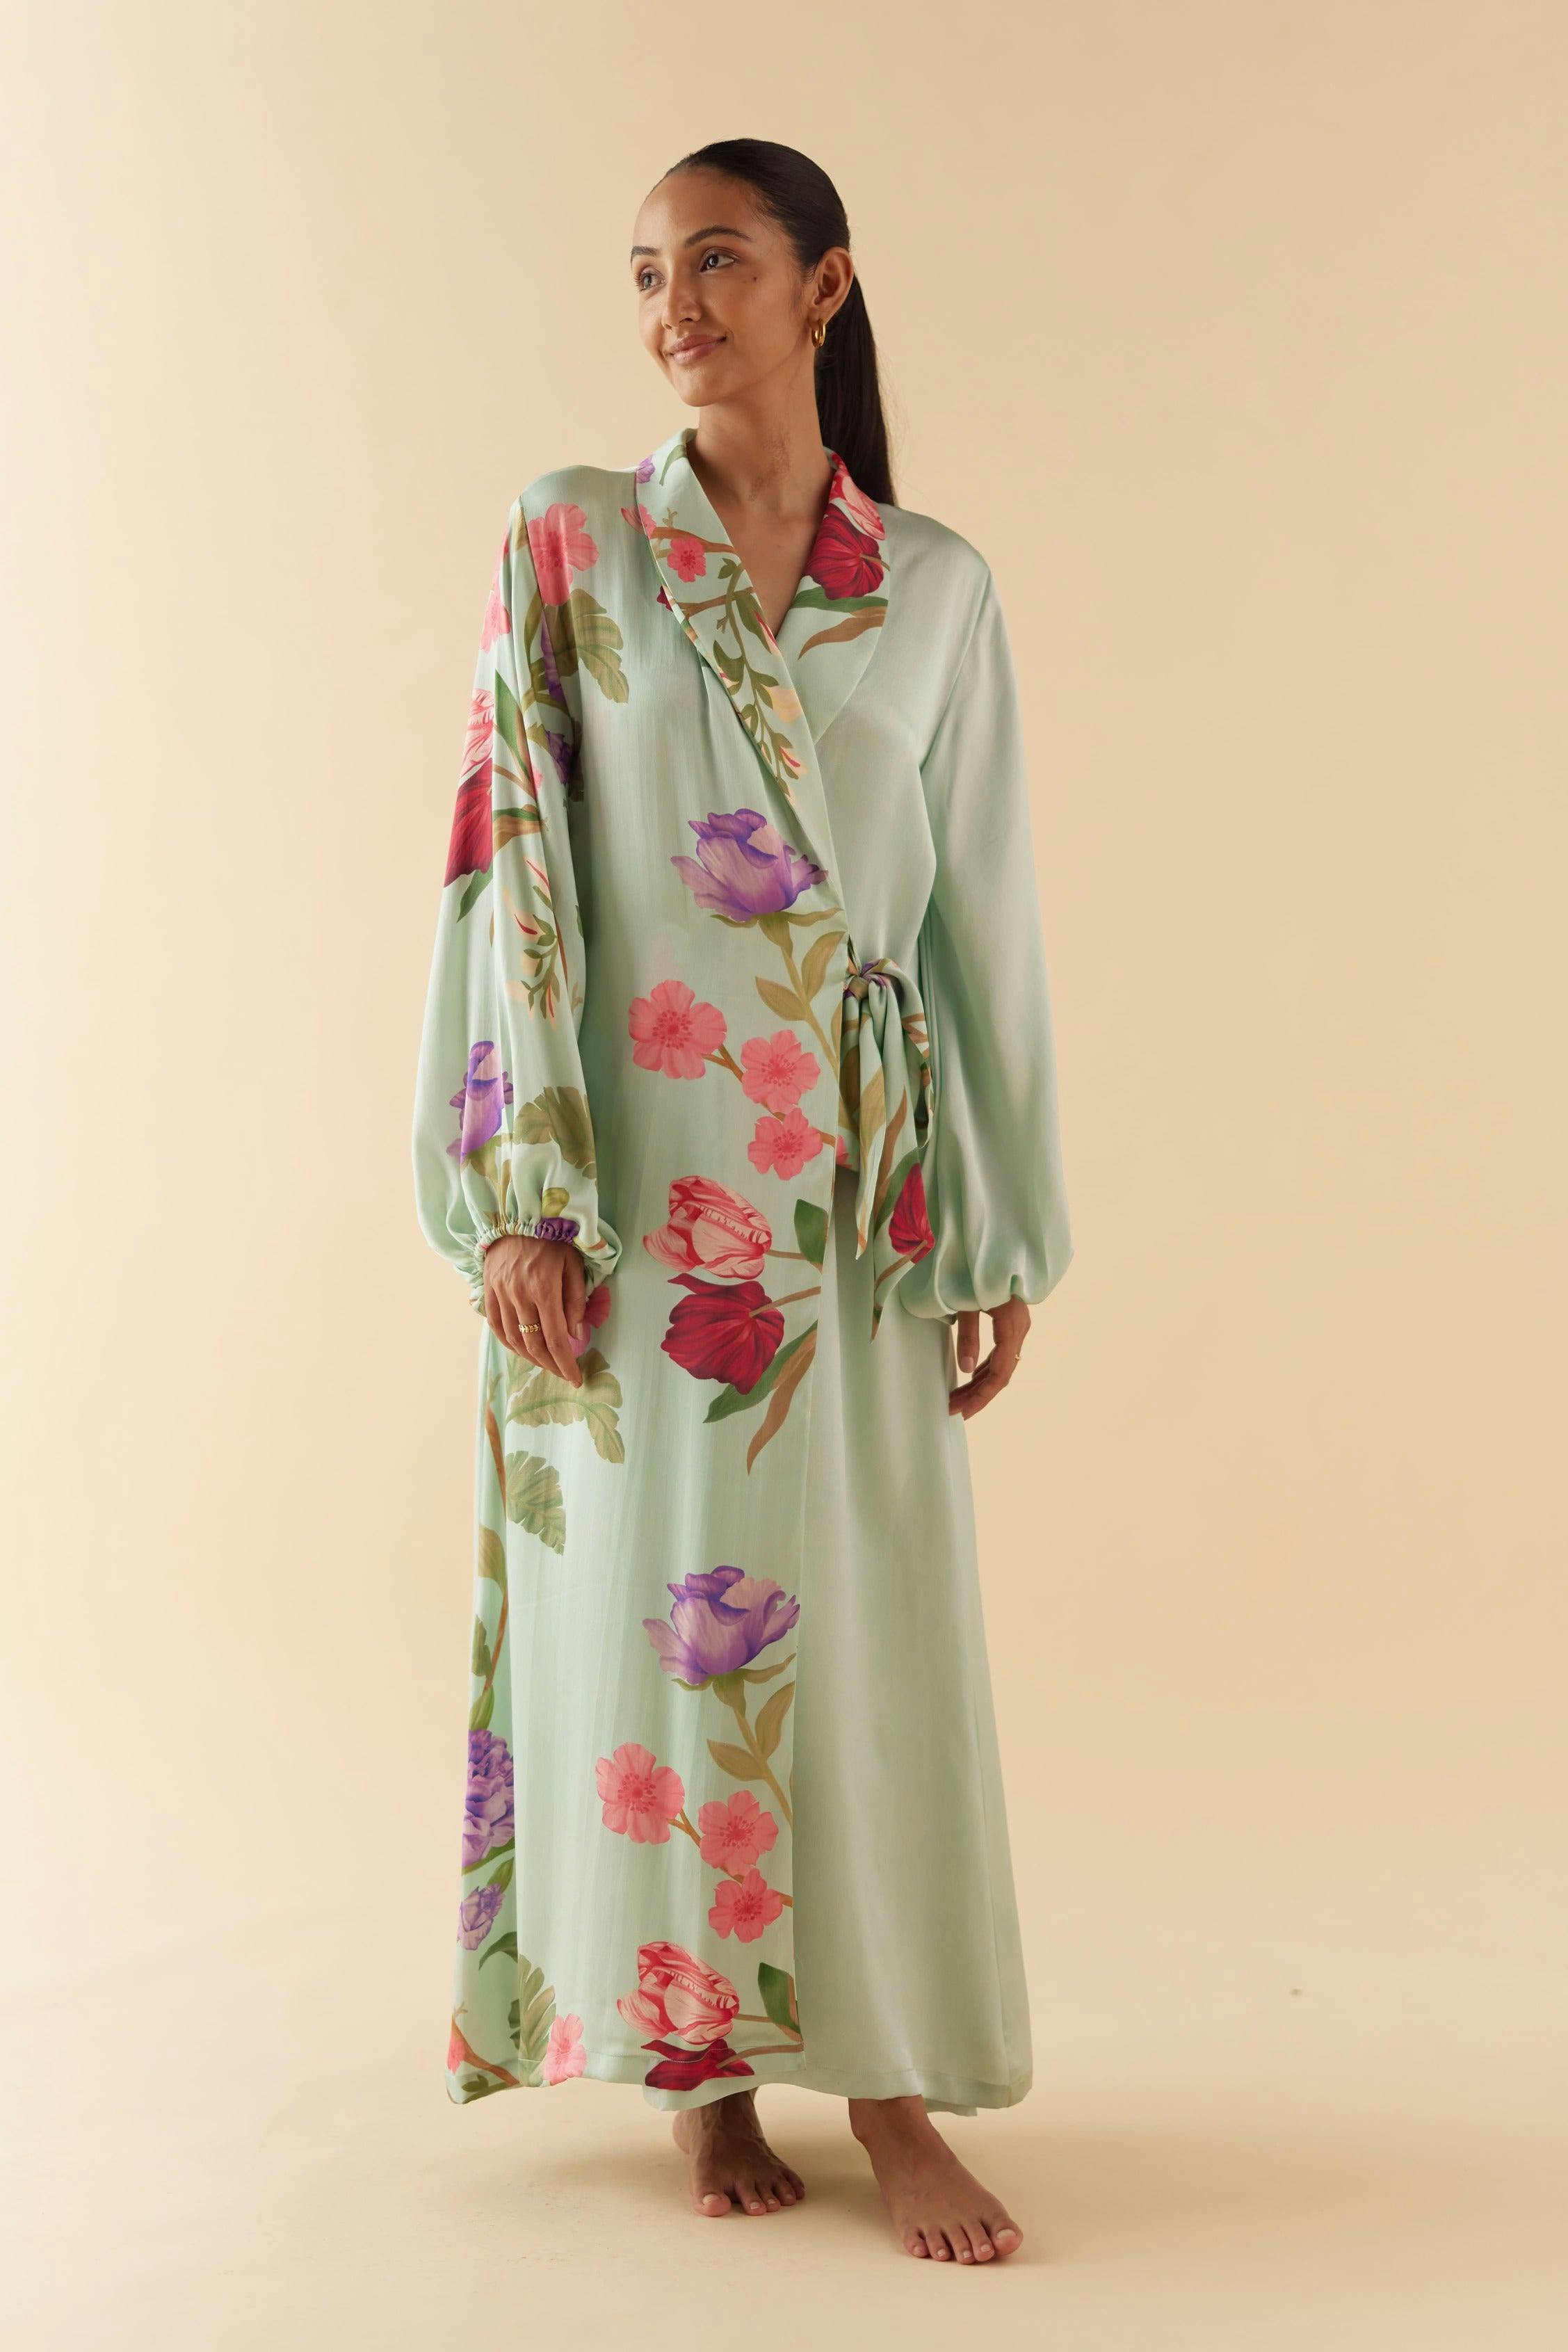 Thumbnail preview #1 for Celeste Floral Dream Silk Robe